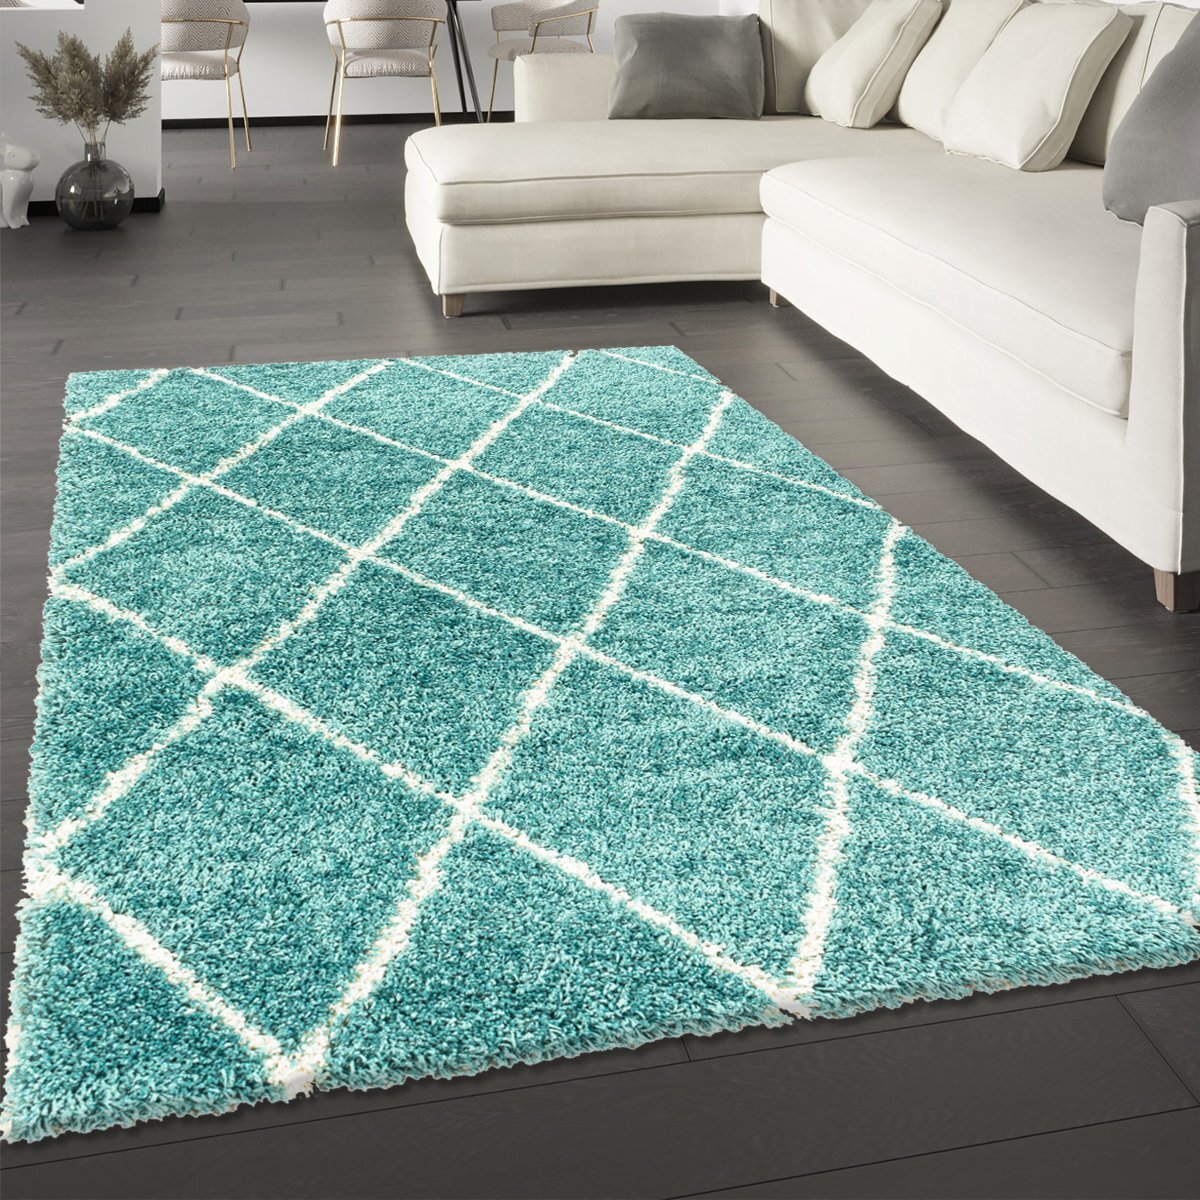 whisper Shaggy Area Rug Contemporary Fluffy 5cm Pile Thick floor Carpet Mat 